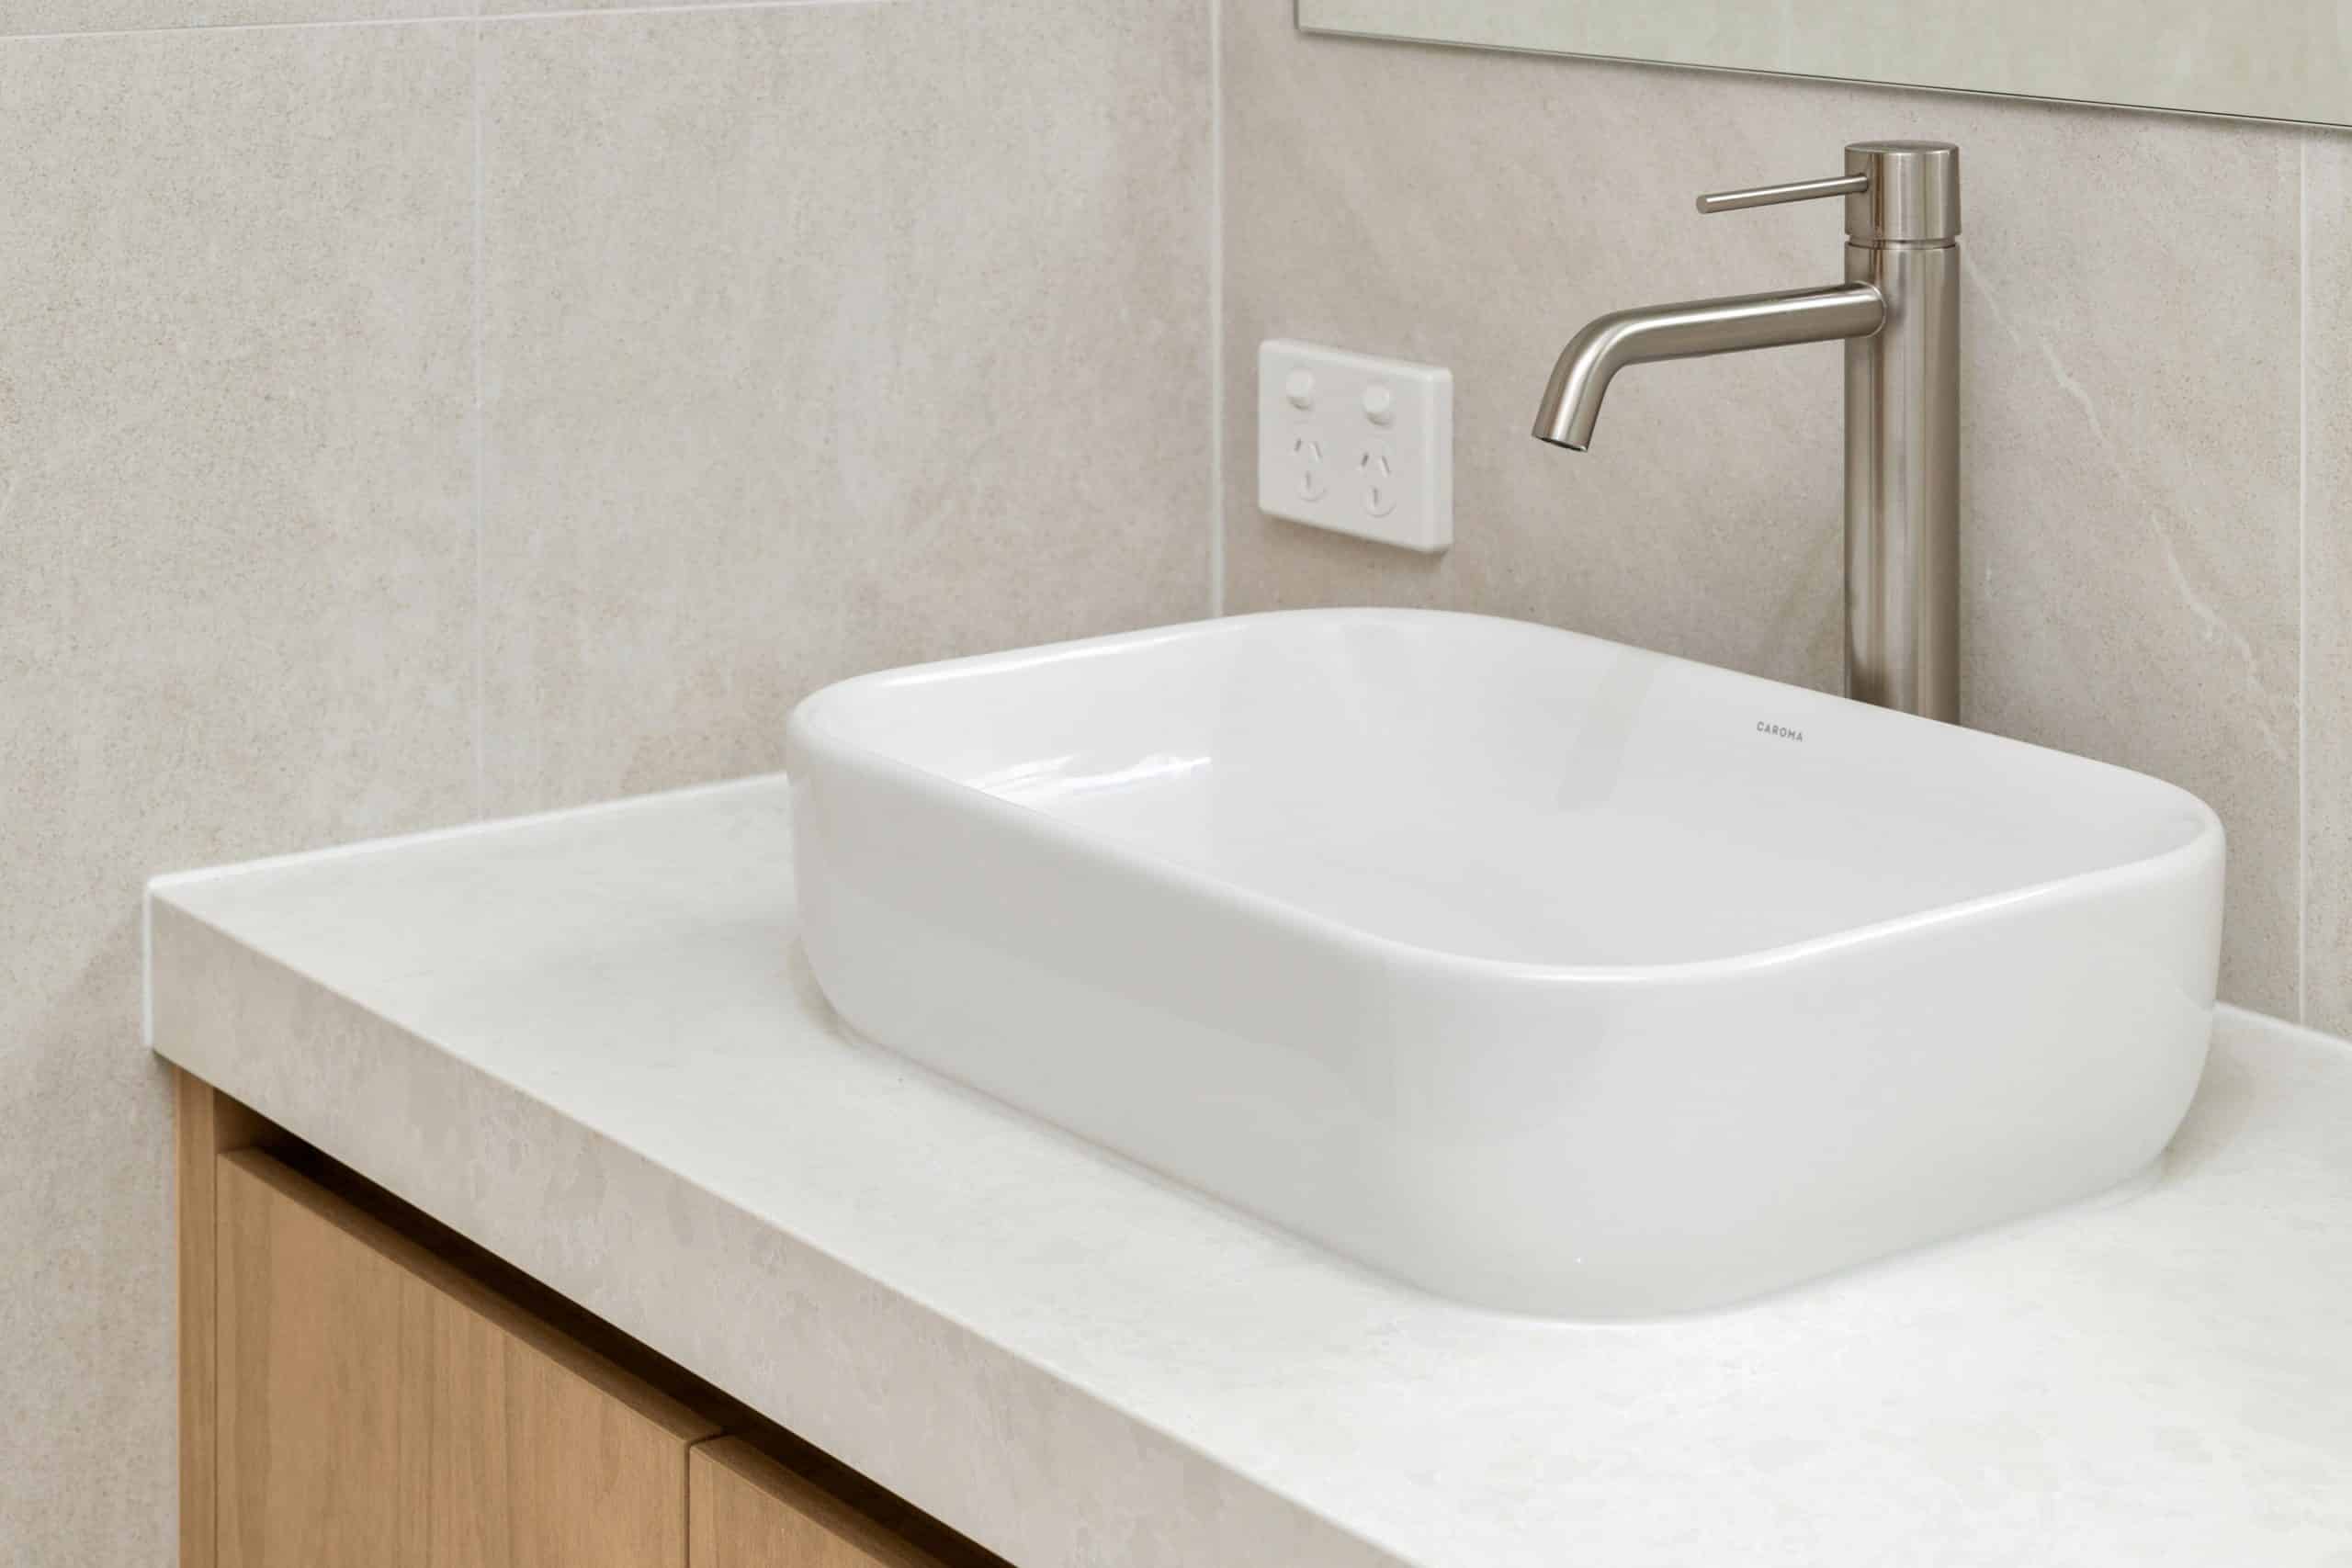 We will meet your Requirement - Bathroom sink image